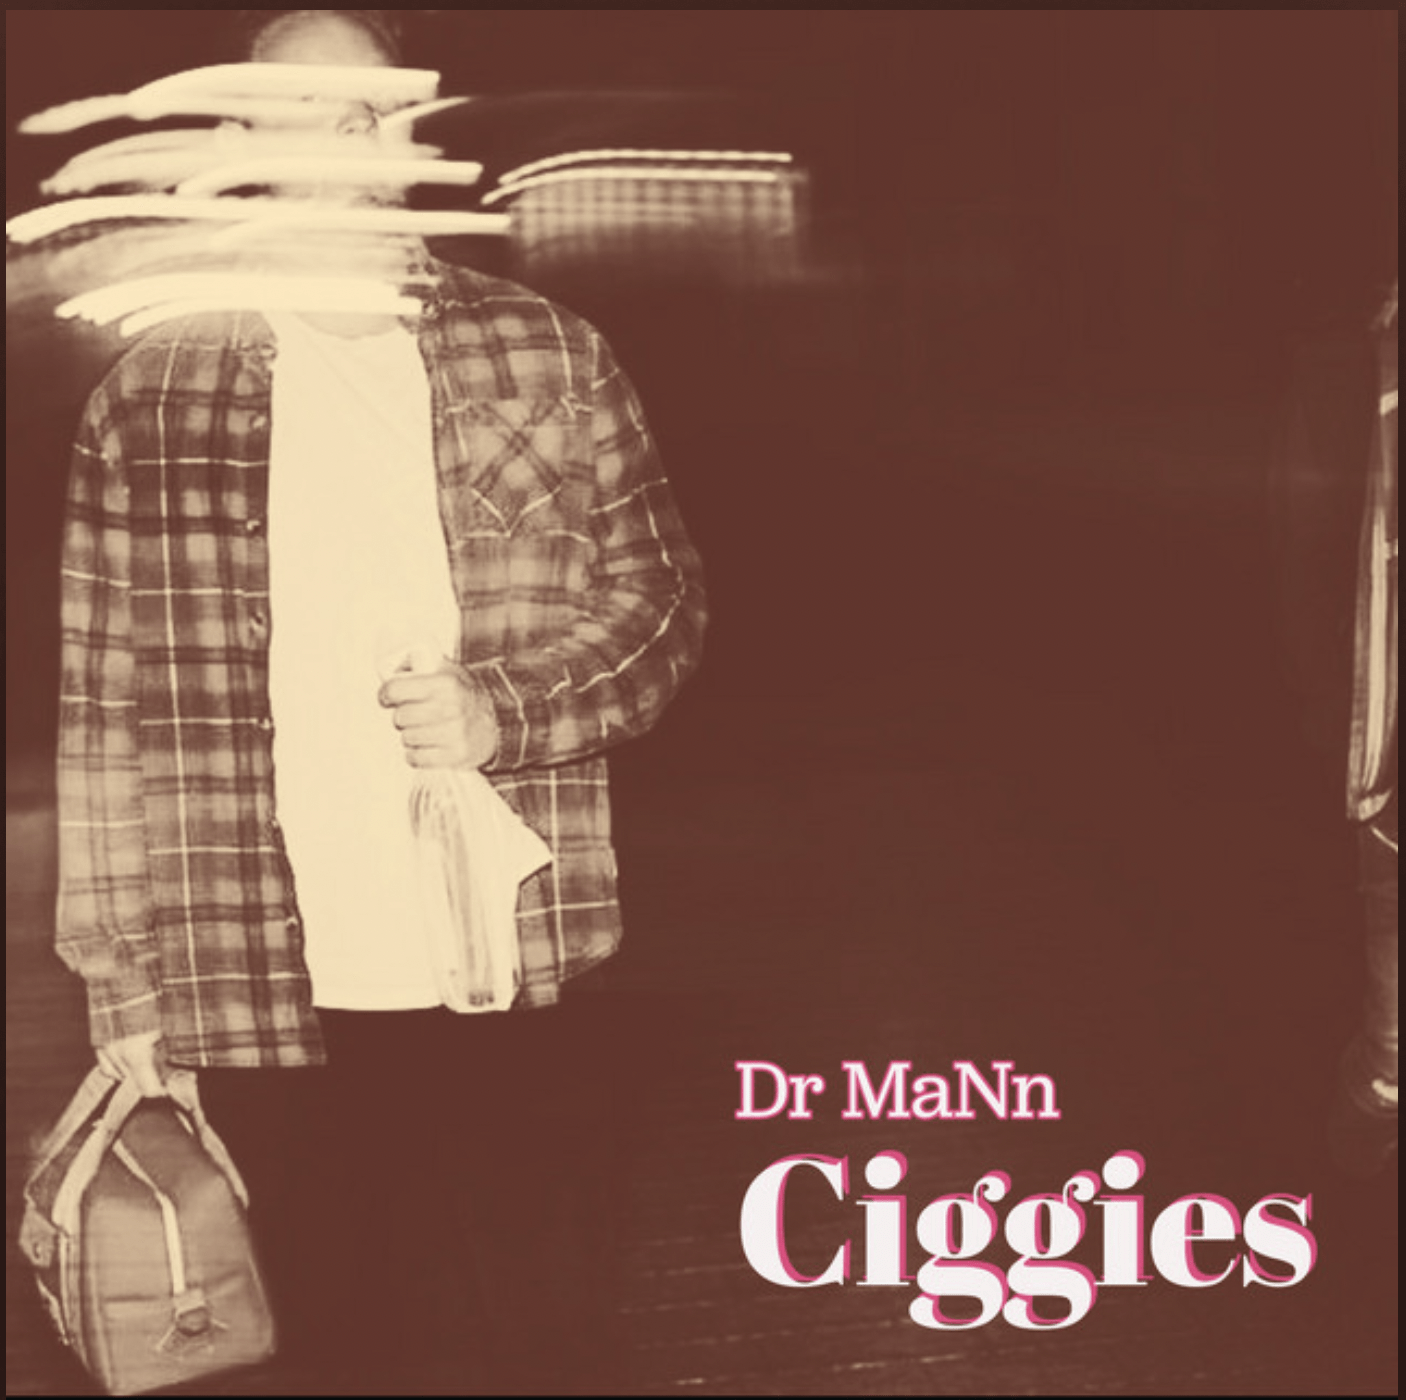 Ciggies (Original Single) by Dr Mann